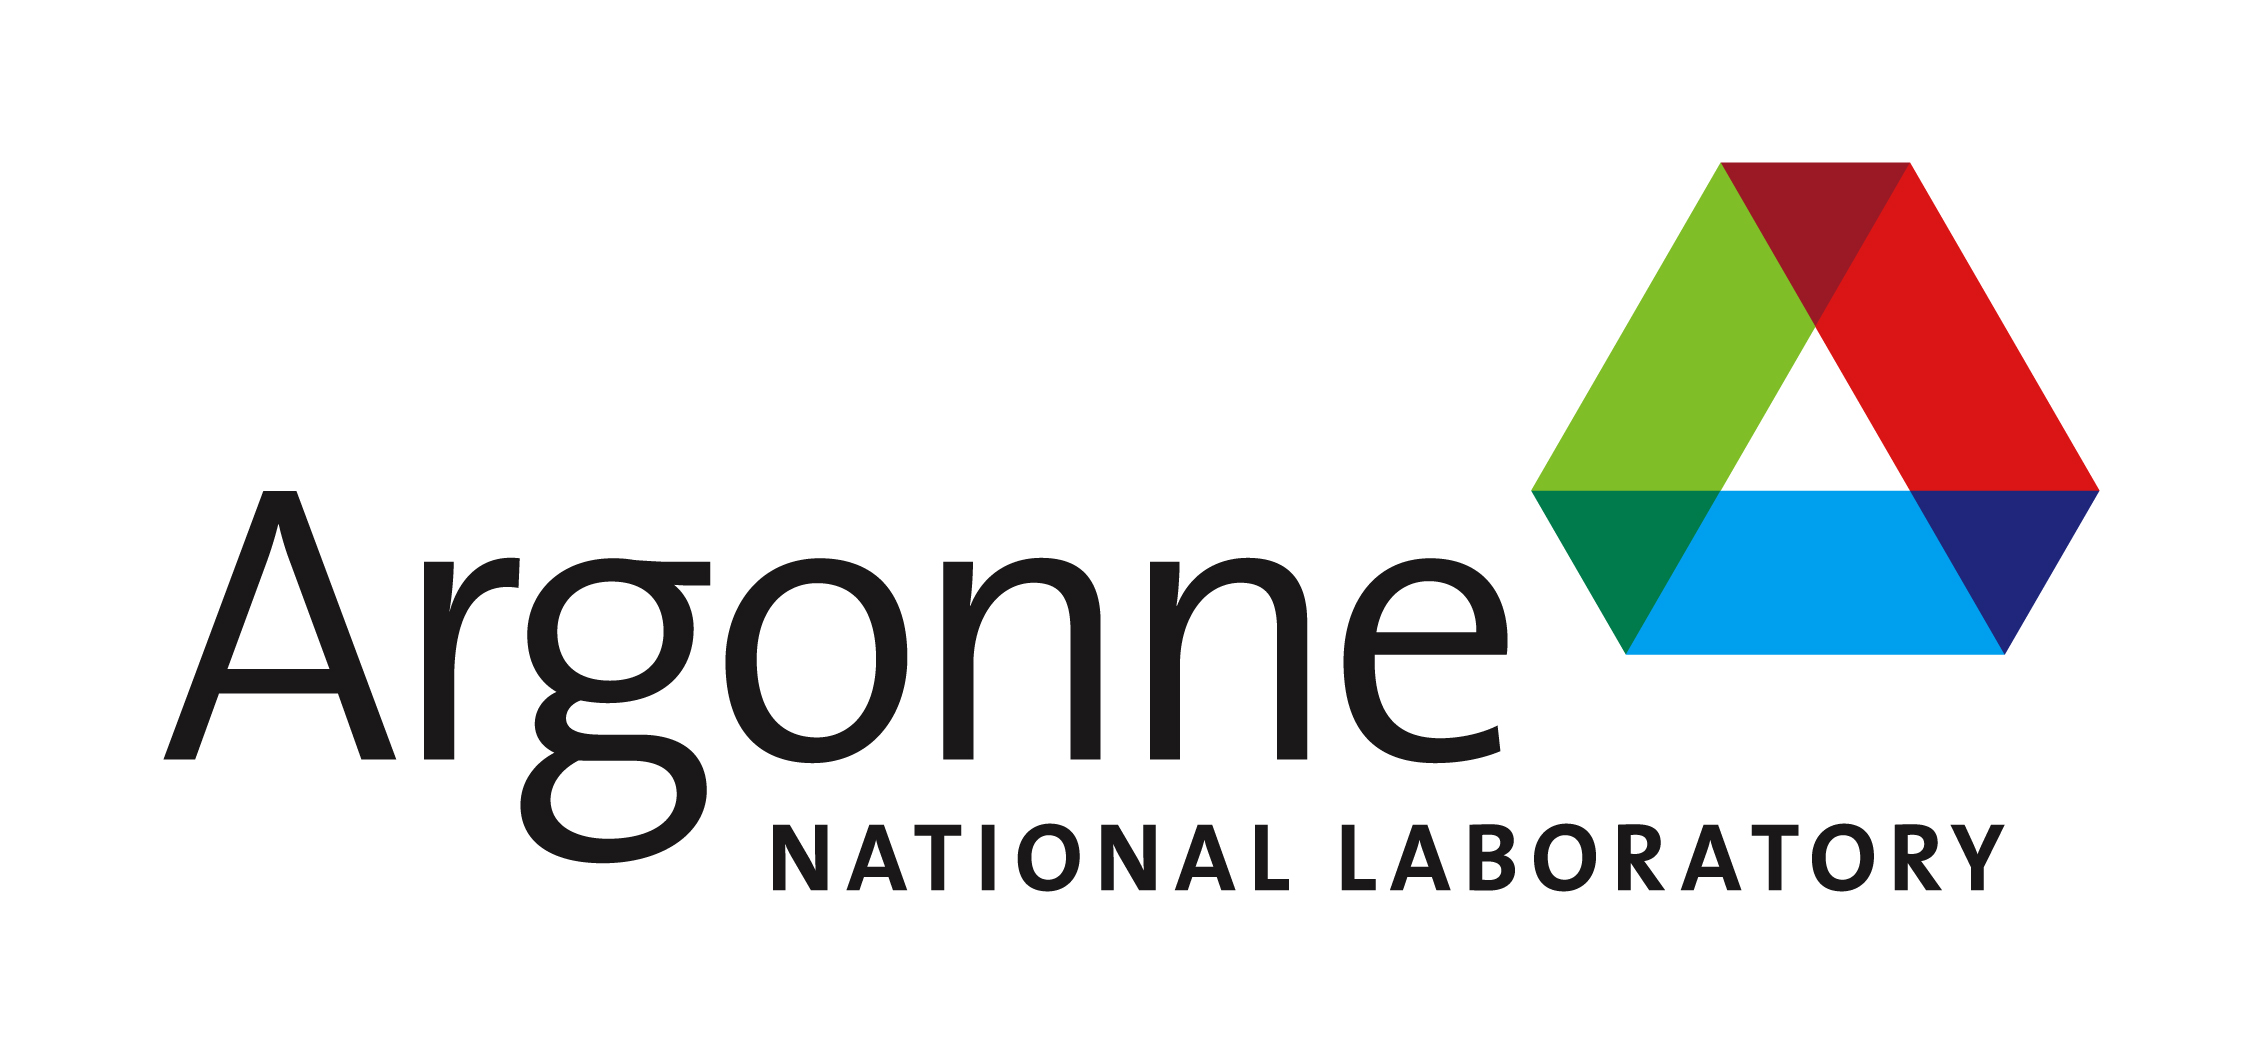 PROJEKTPROFIL: Argonne National Laboratory (2015) | Energiebehörde